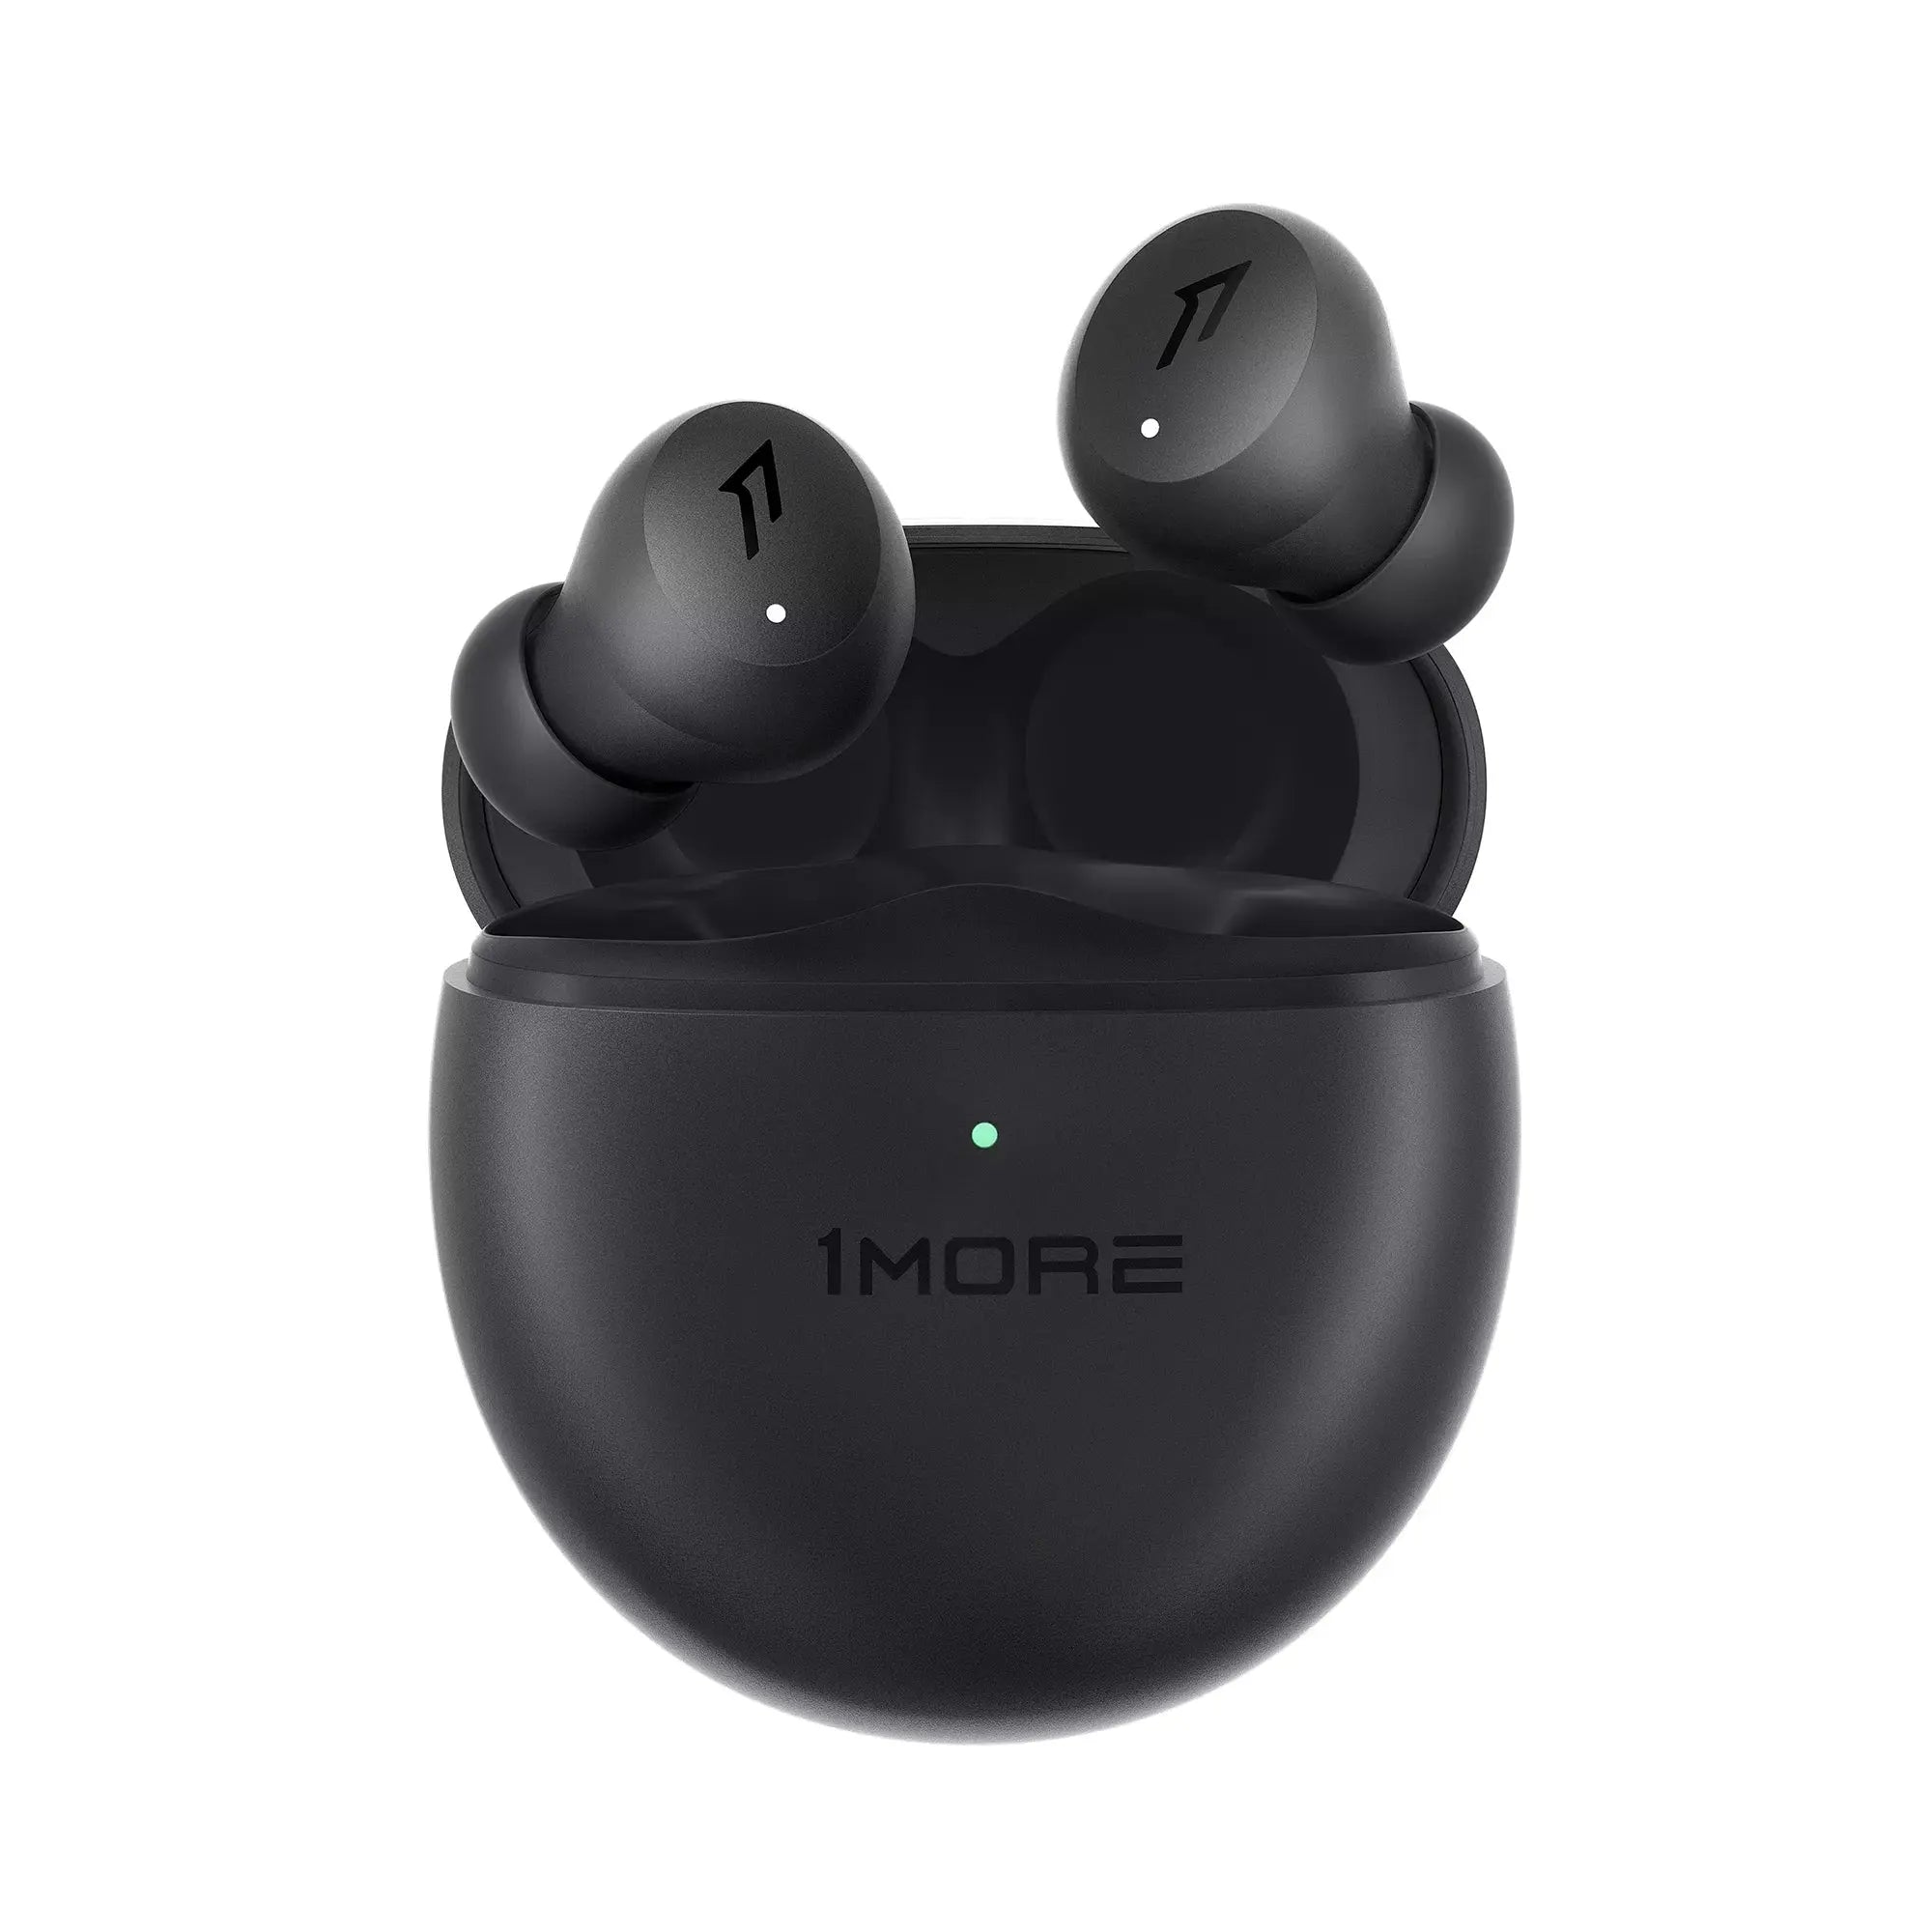 1MORE ComfoBuds Mini True Wireless Noise Canceling Headphones - 1MORE